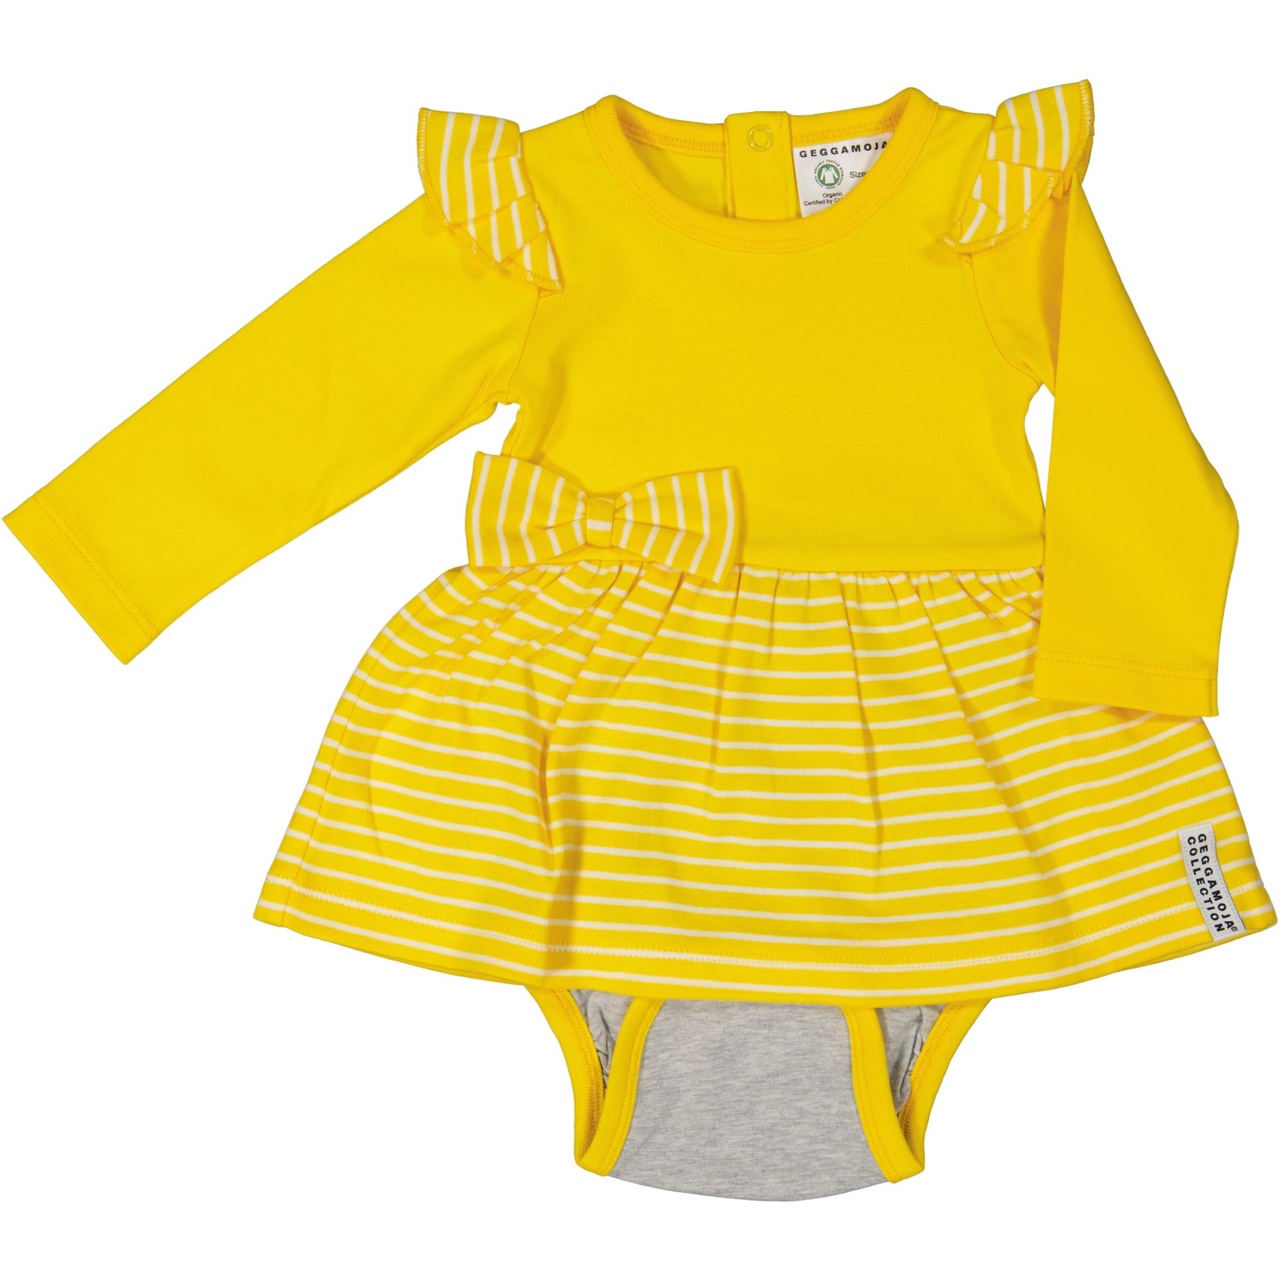 Body dress Yellow/white  62/68